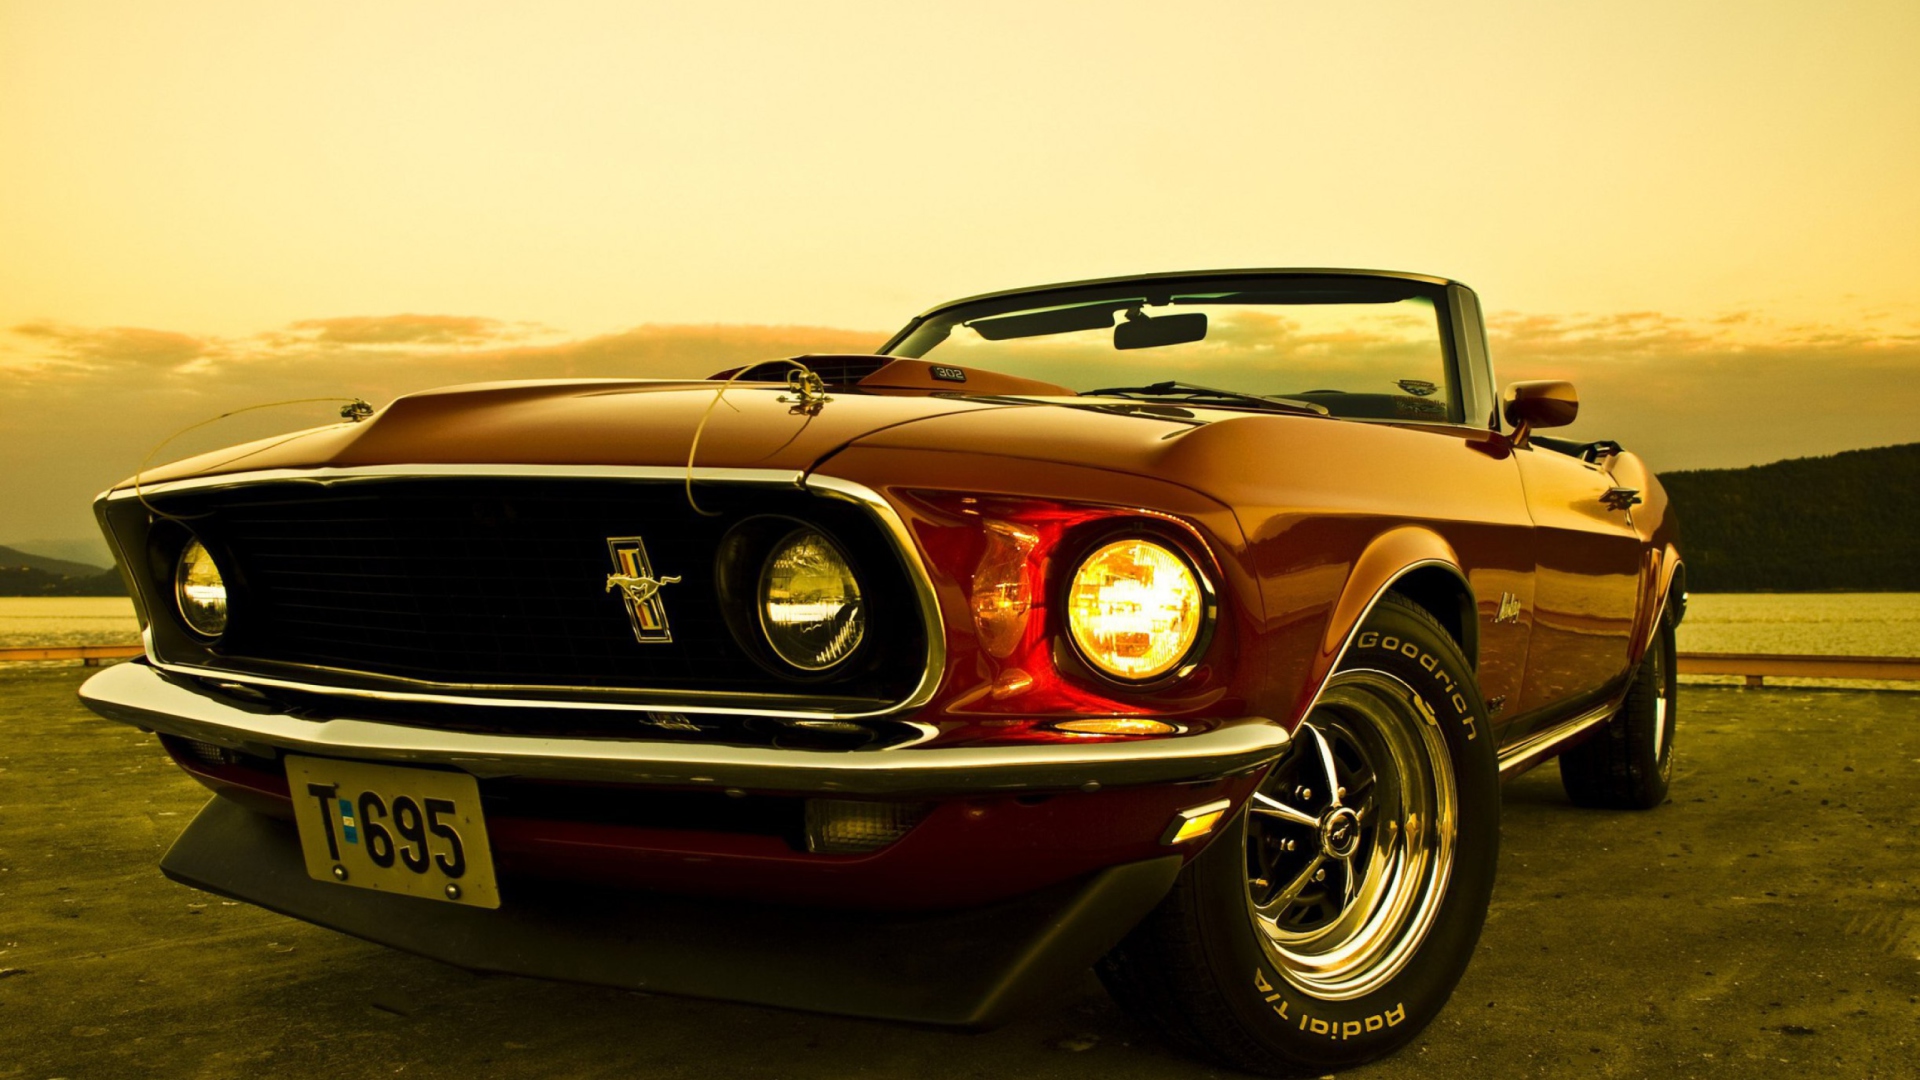 Das 1969 Ford Mustang Wallpaper 1920x1080